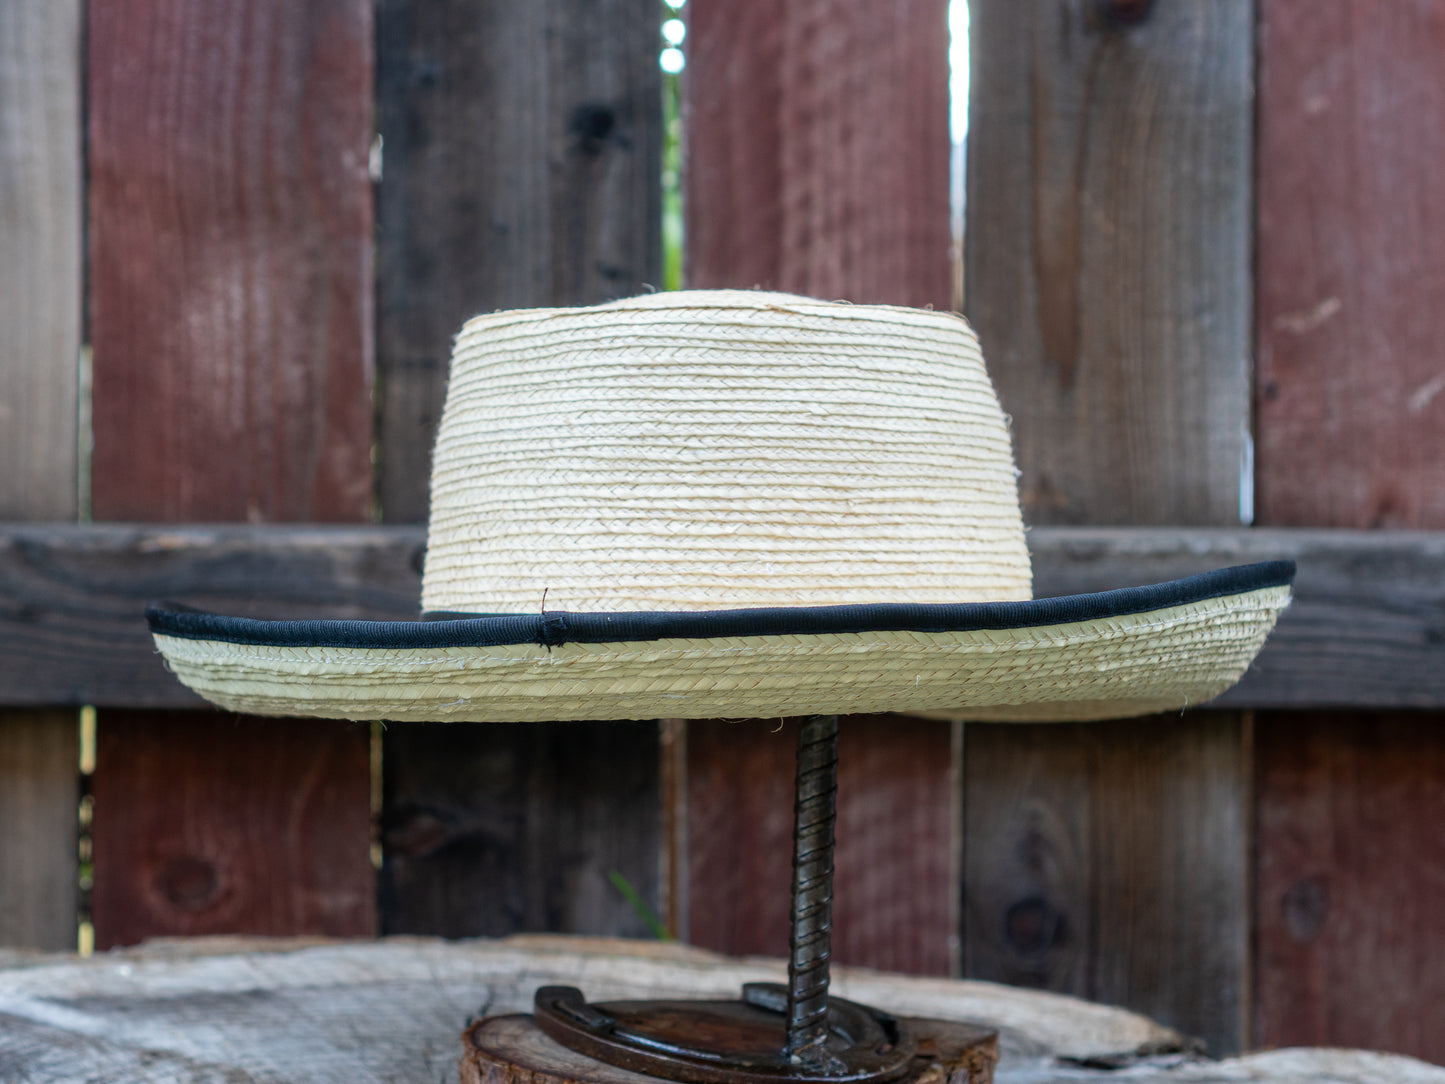 SunBody Hats Guatemala Reata Crease Bound Edge Black Palm Leaf Hat Tan